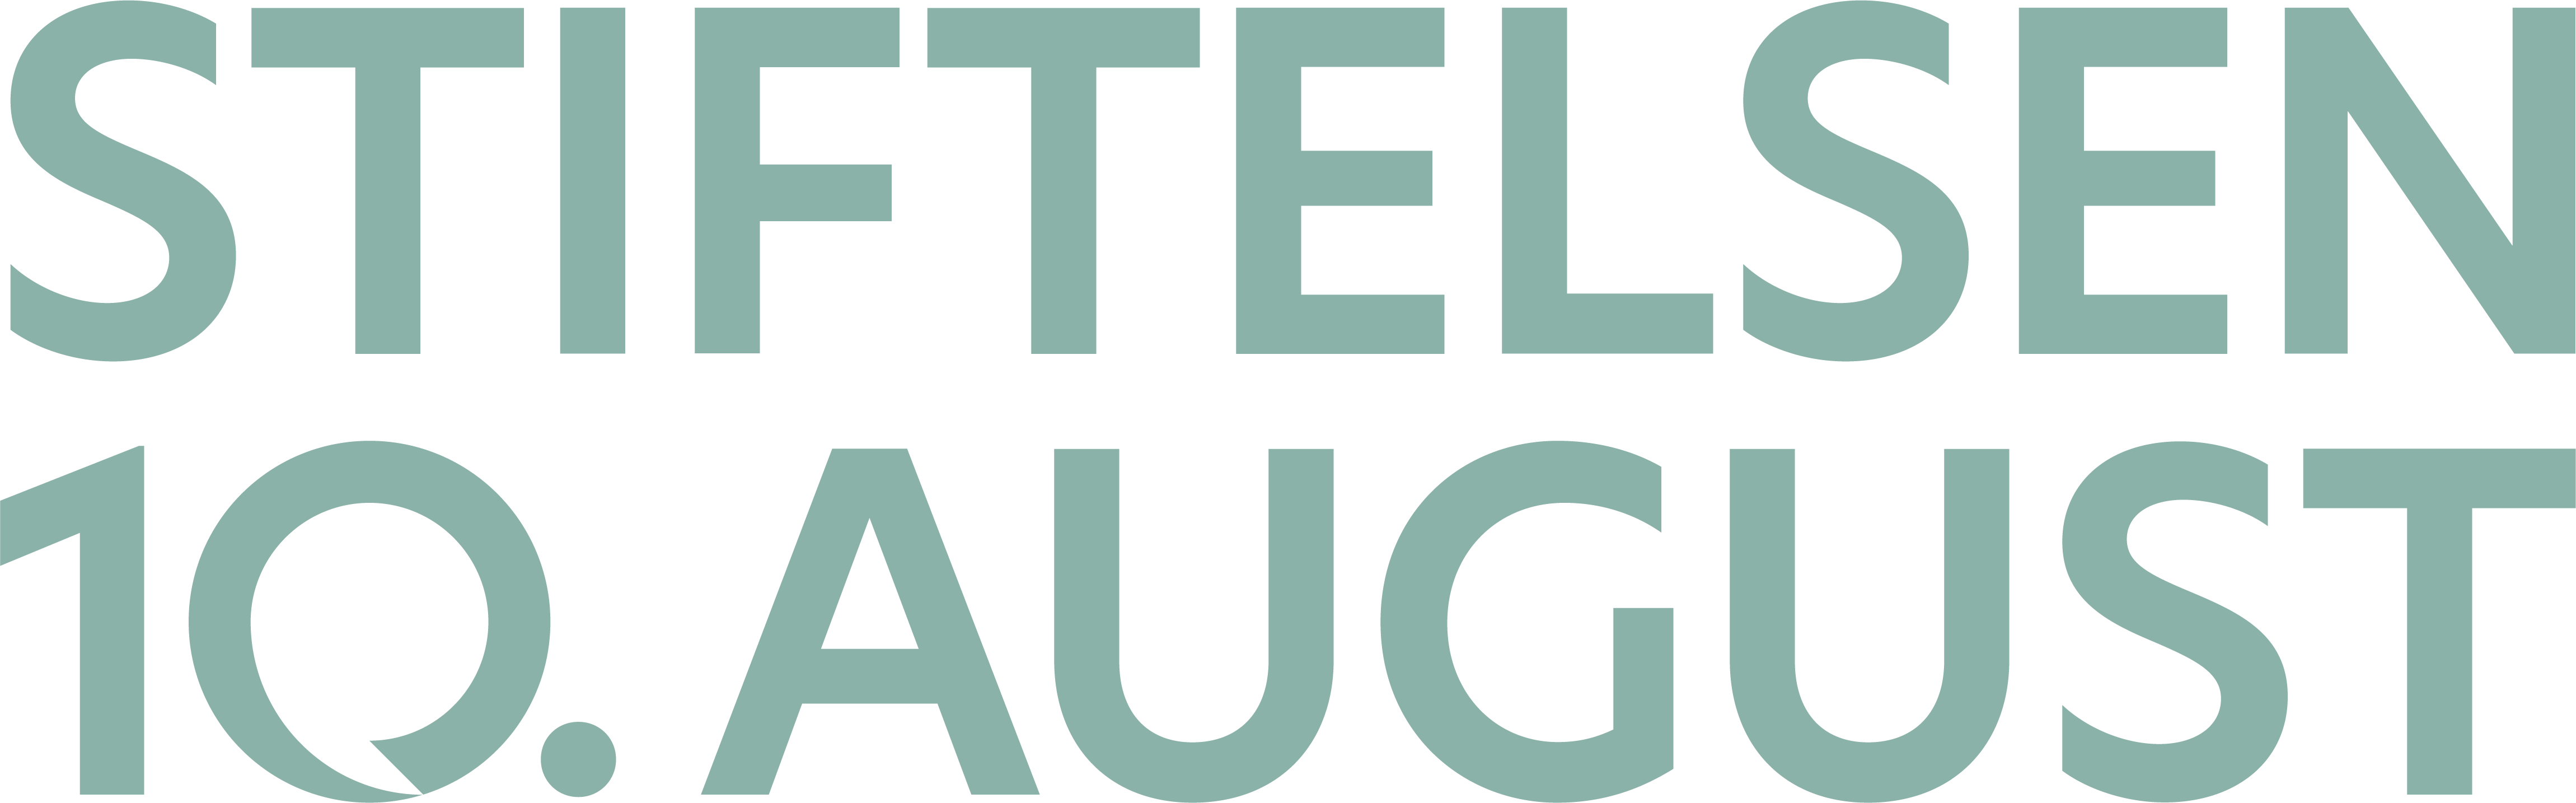 10 august main logo green